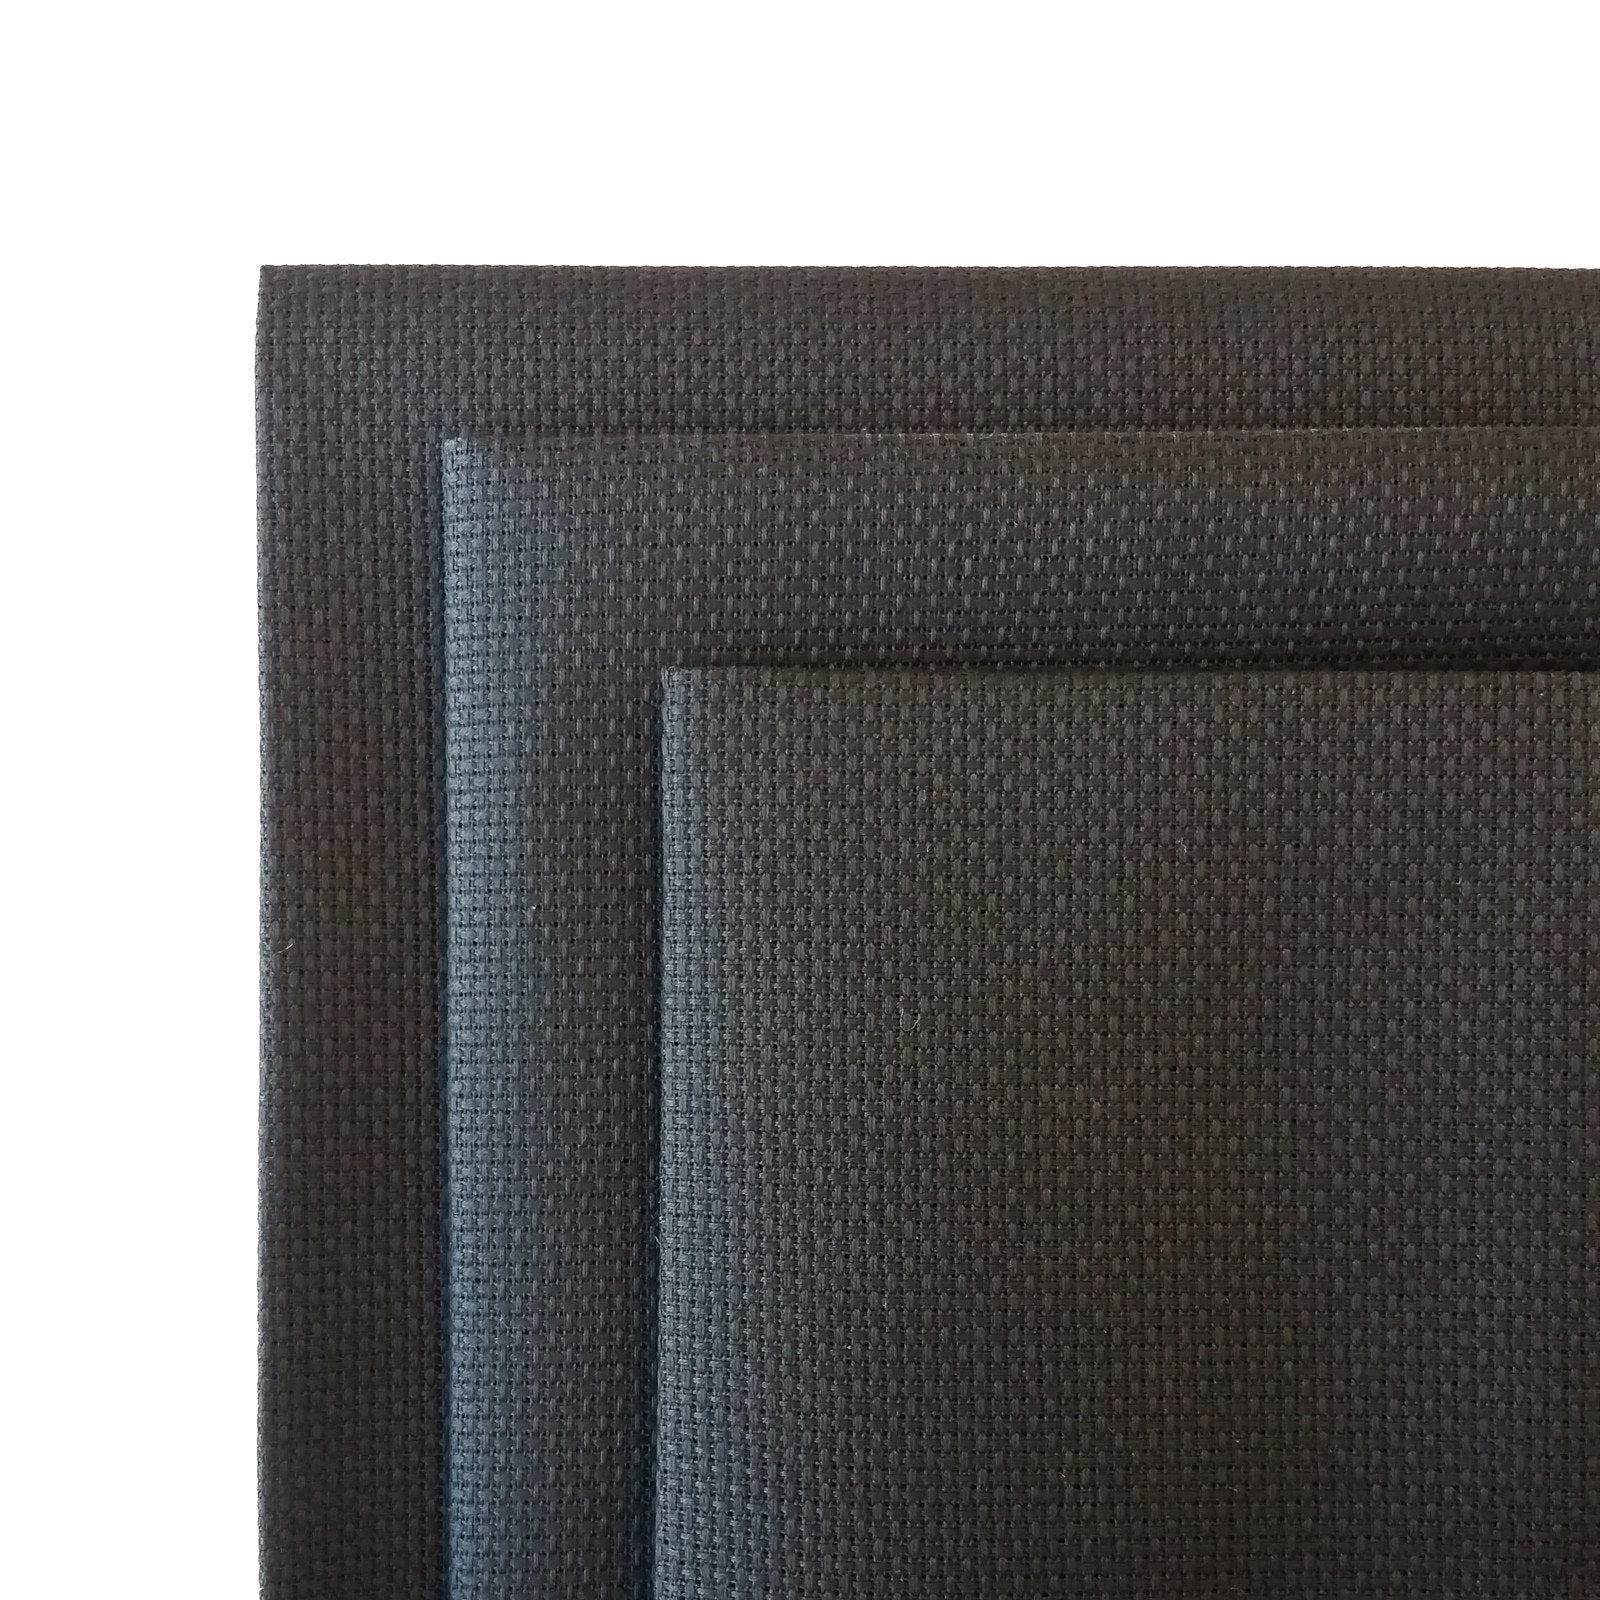 Design Works 14 Count Black Aida Fabric - 15 x 18 inches 3507